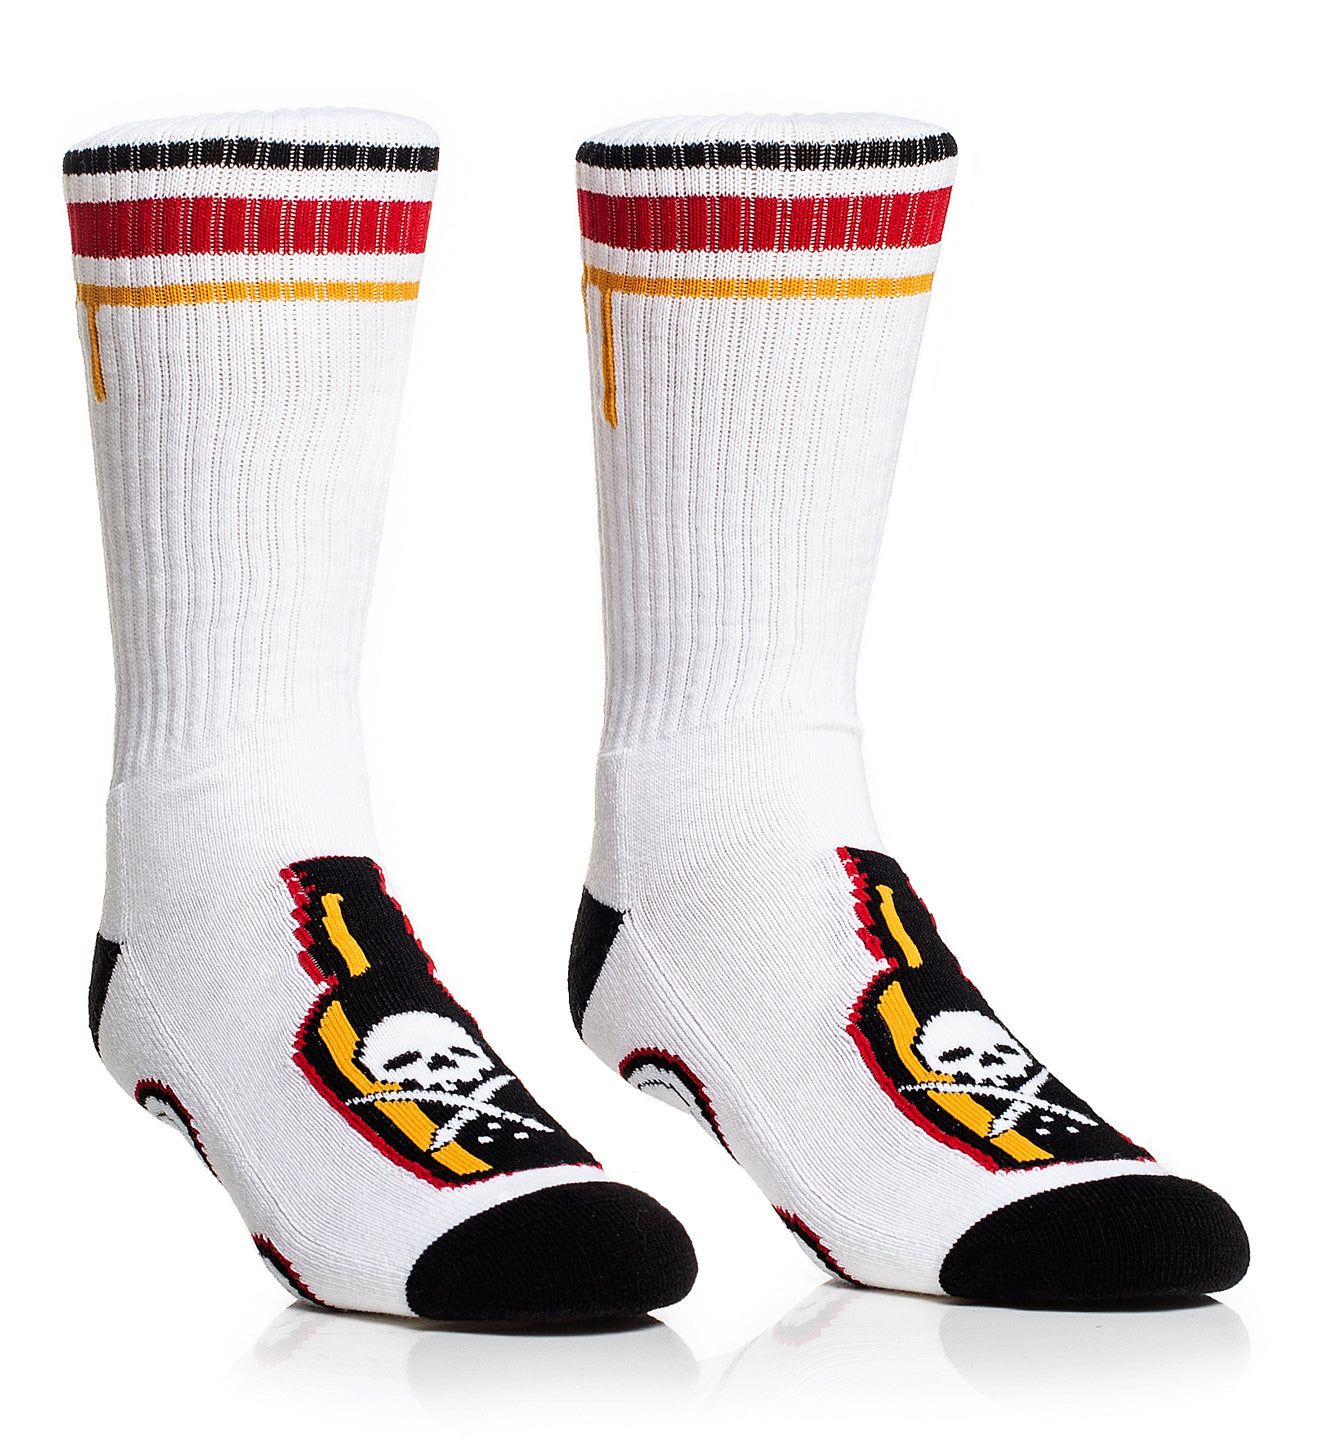 Draft Socks - 